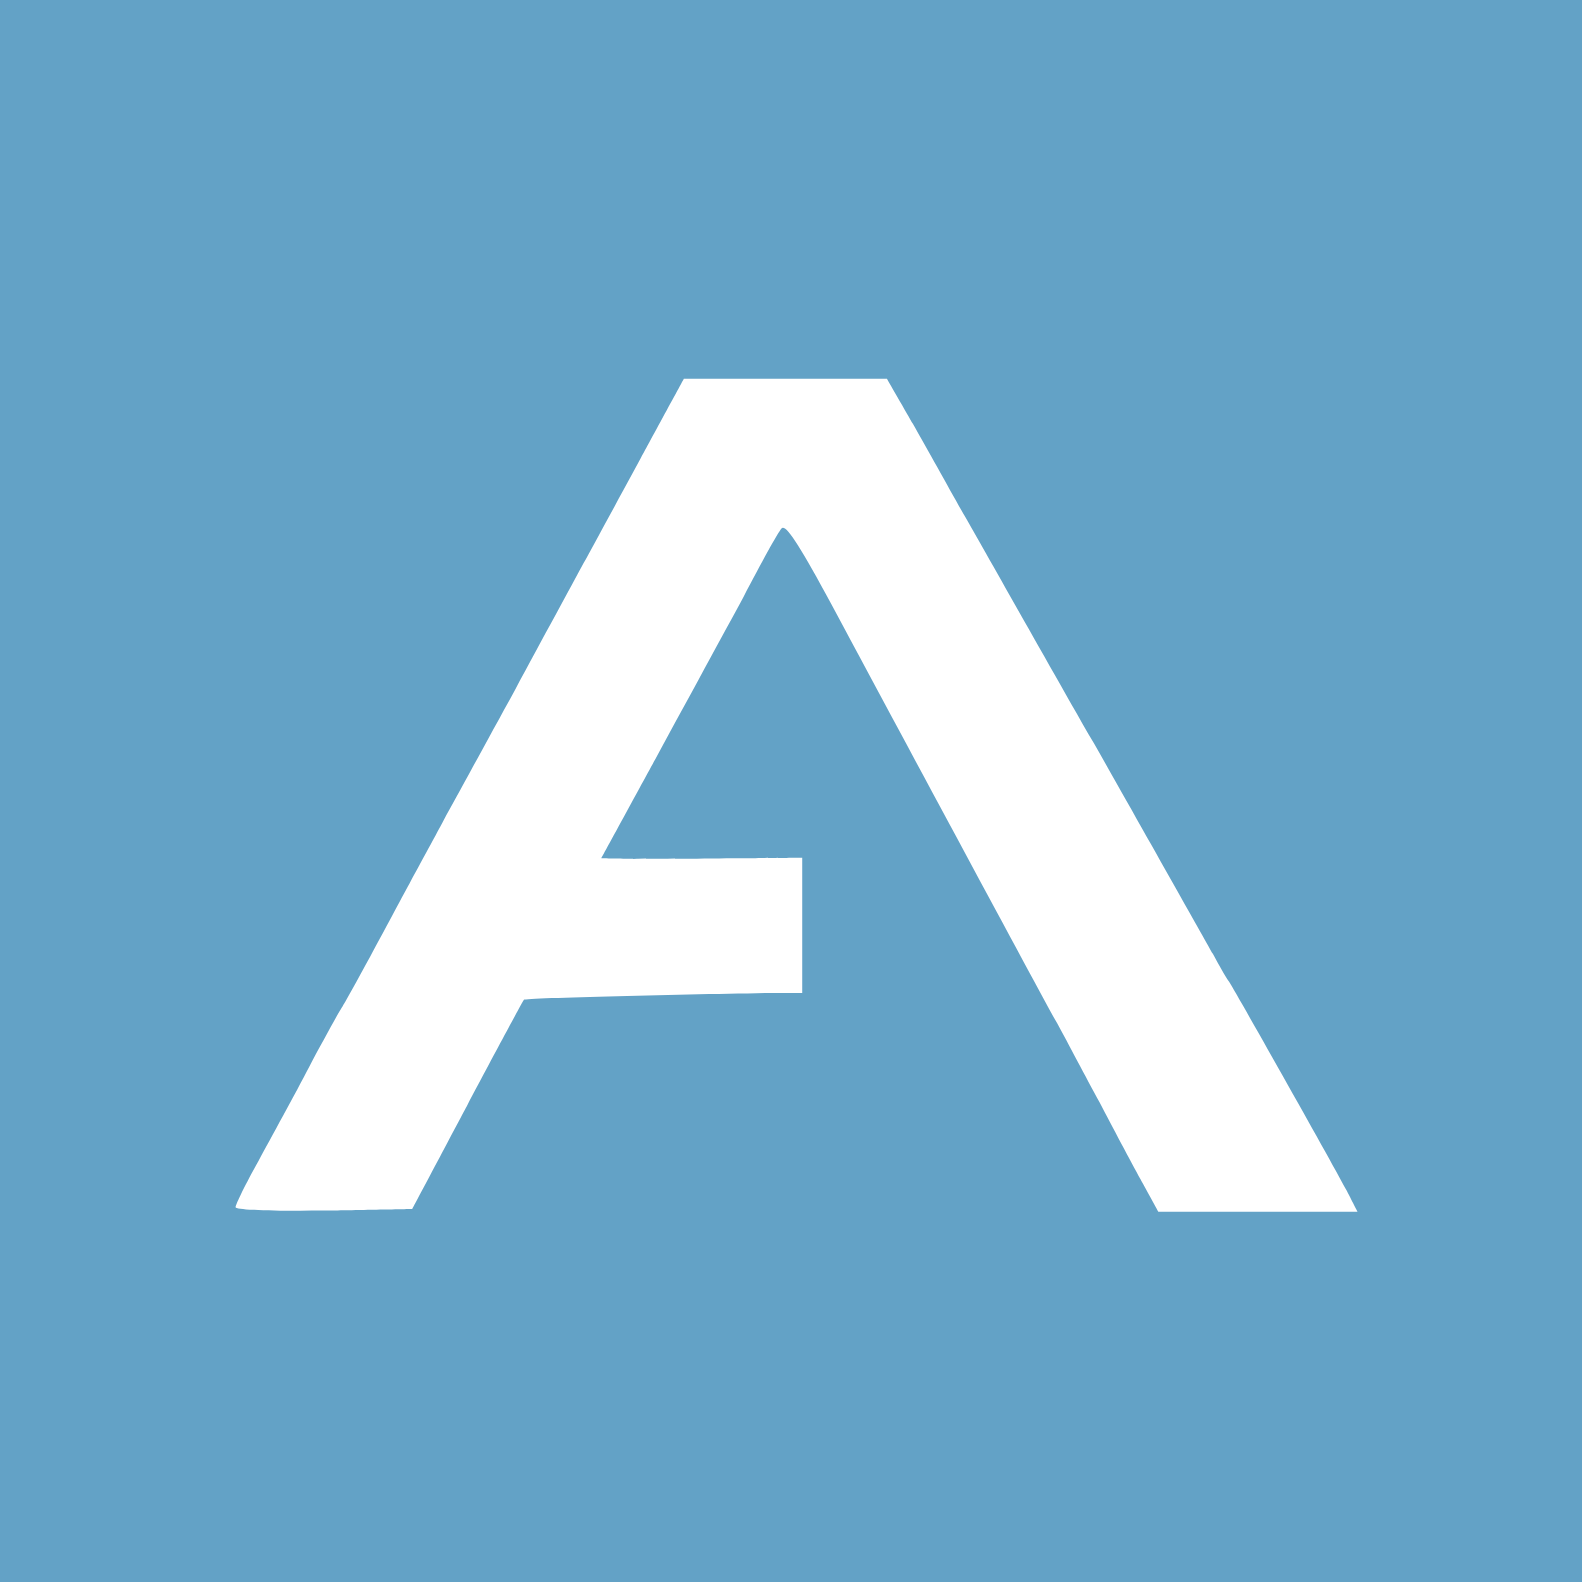 Addtech AB logo (transparent PNG)